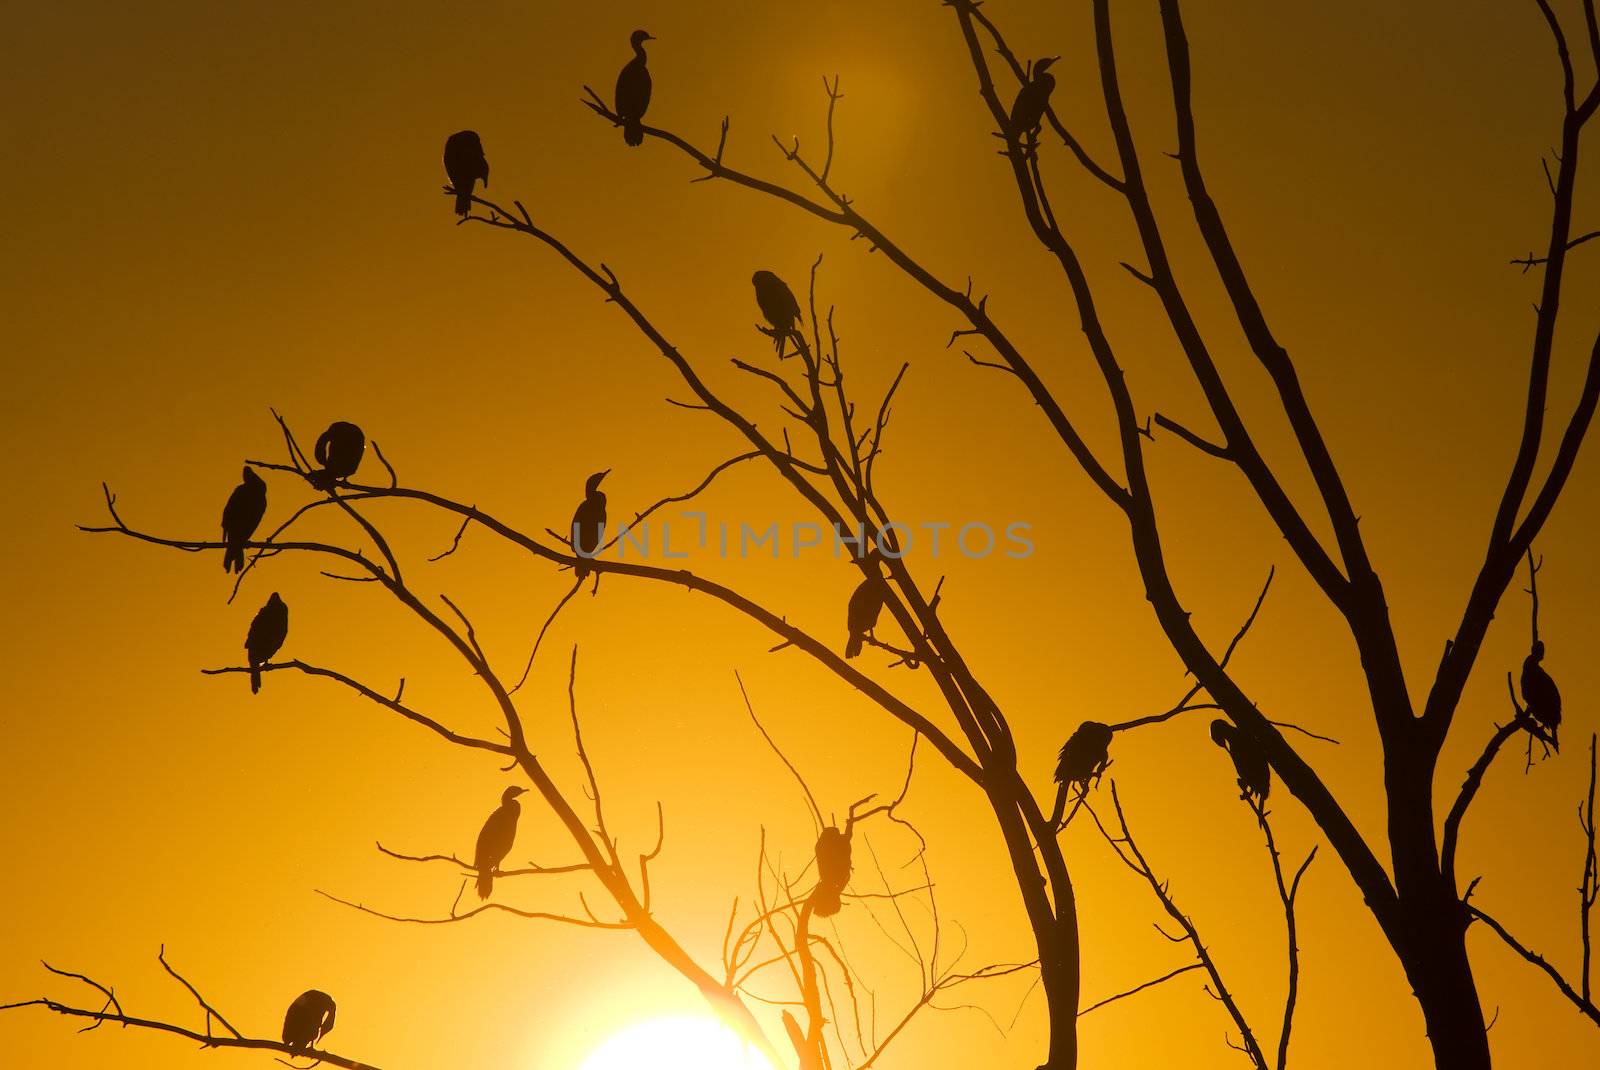 Cormorants in tree by pictureguy